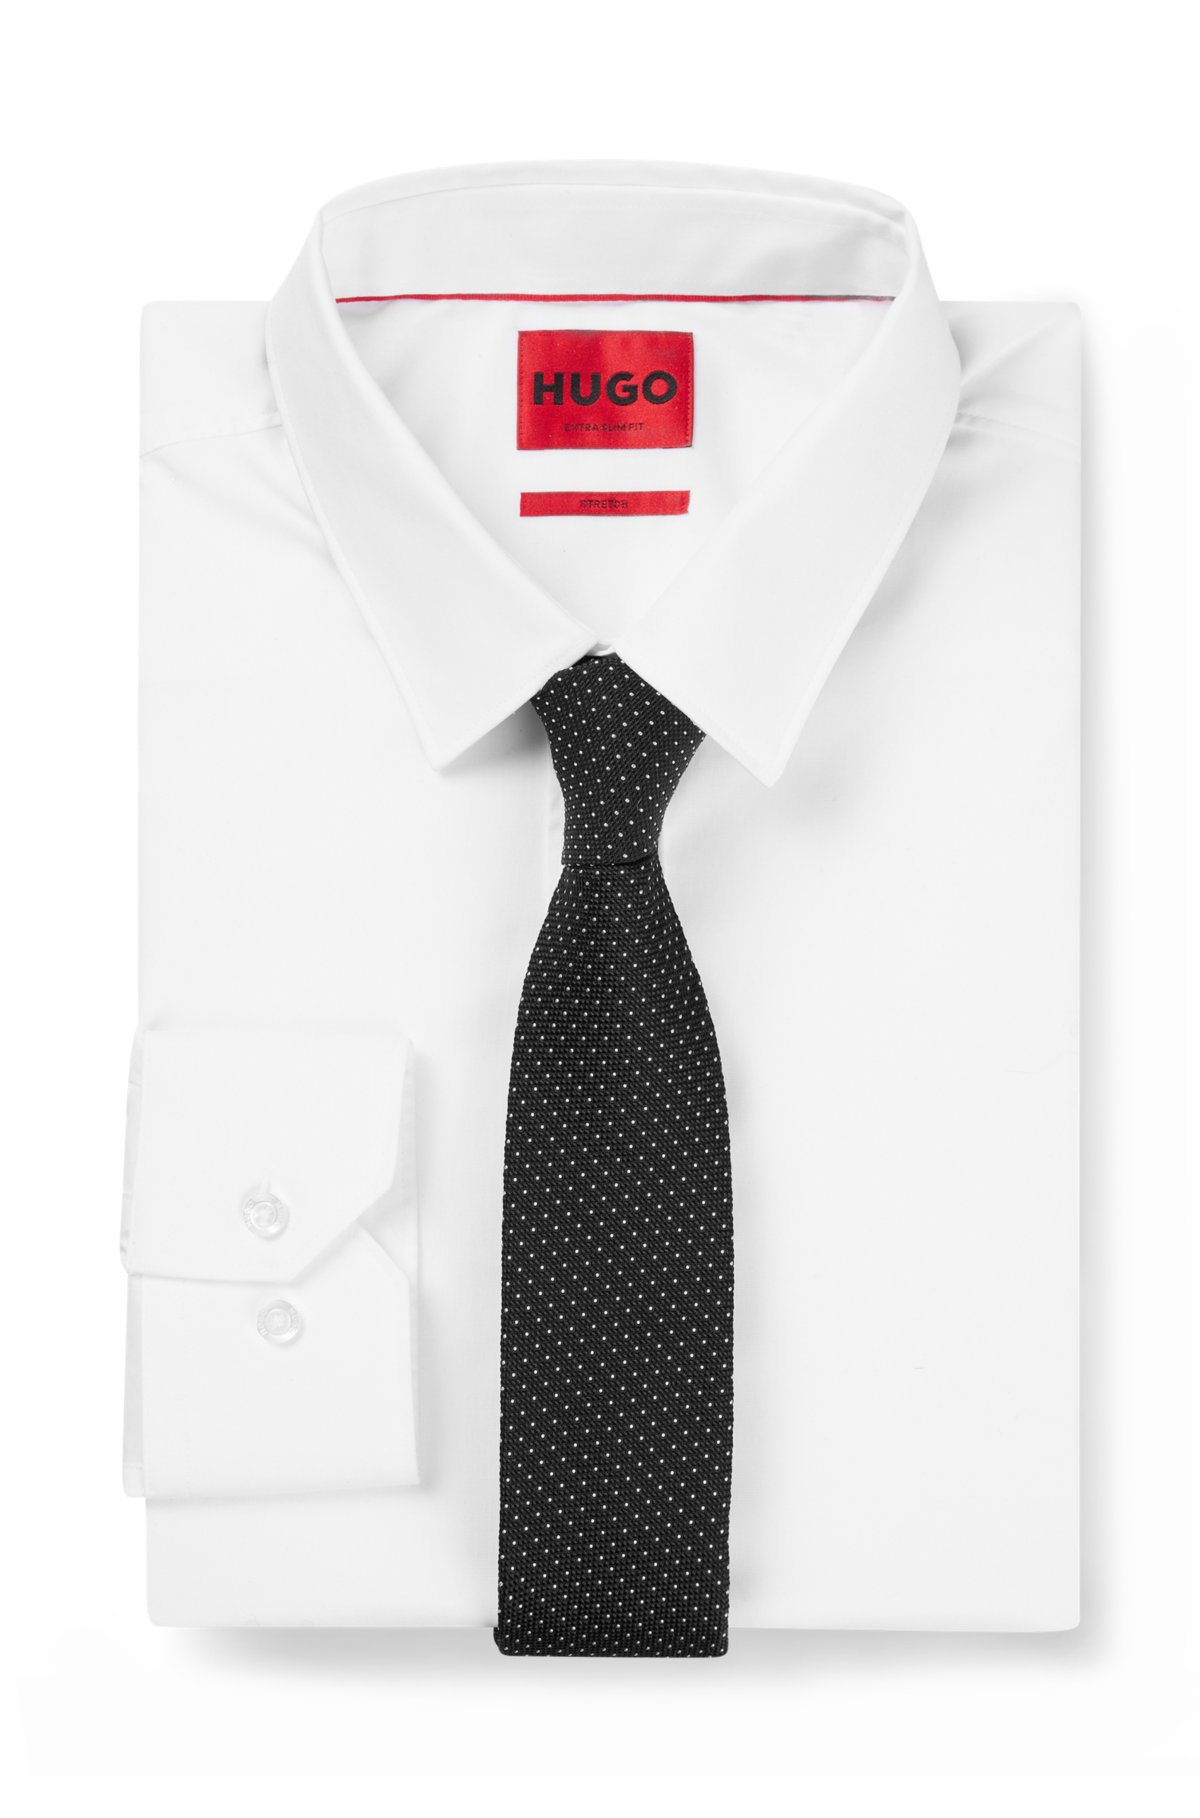 - aus Seide HUGO mit reiner Krawatte Jacquard-Muster